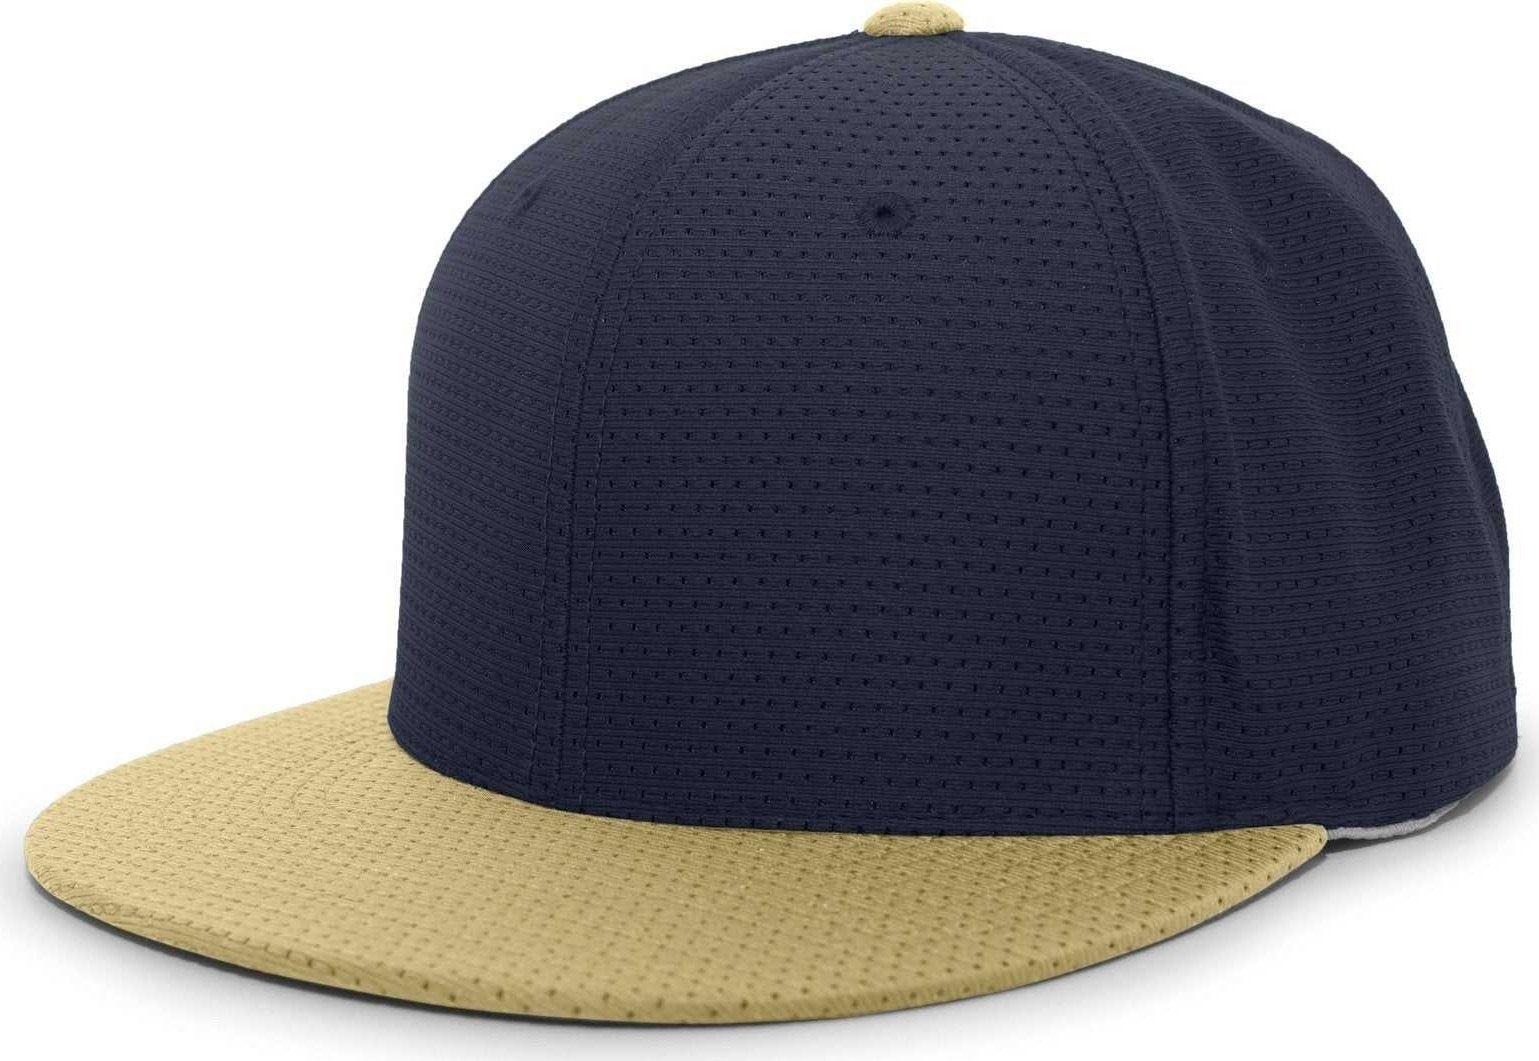 Pacific Headwear ES818 Air Jersey Performance Flexfit Cap - Navy Vegas Gold - HIT a Double